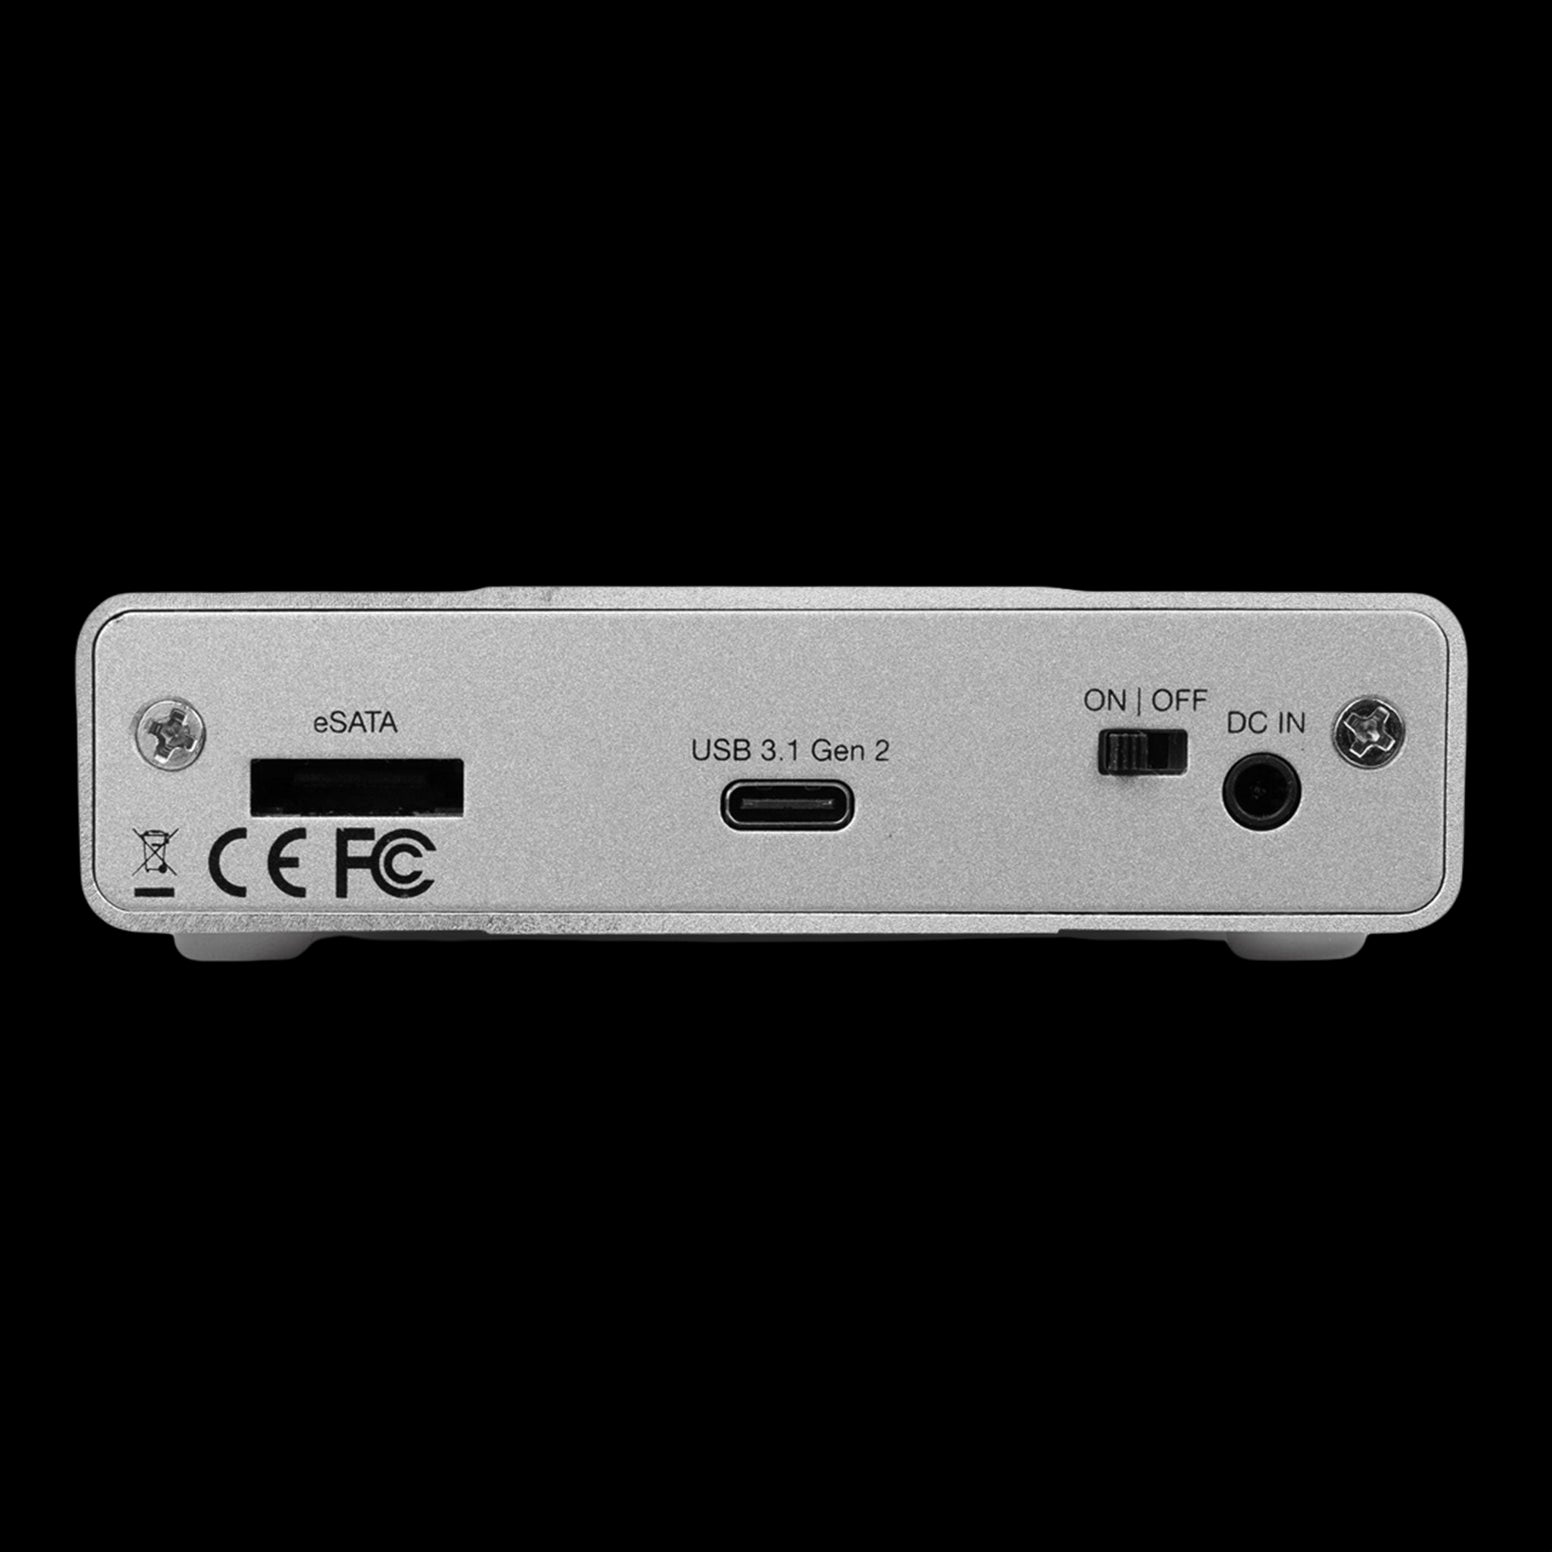 1TB OWC 7200RPM HDD Mercury Elite Pro mini Portable External Storage (USB 3.1 Gen 2 & eSATA) - Discontinued